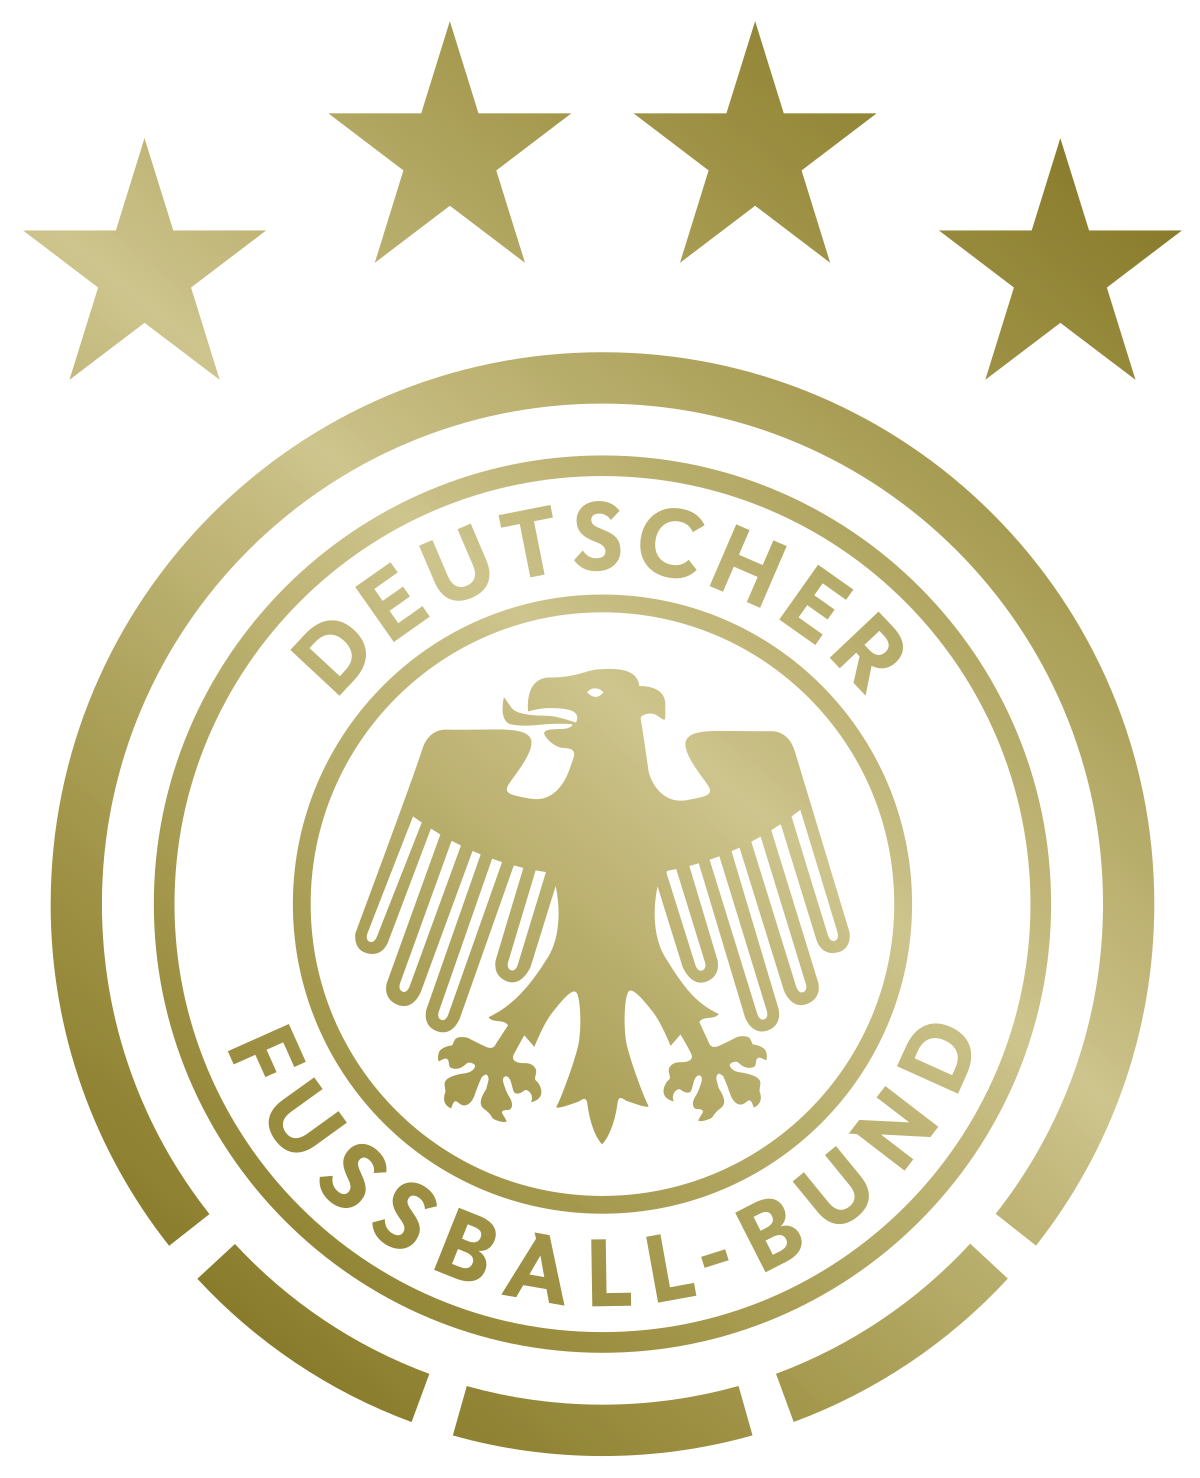 Équipe d'Allemagne de football — Wikipédia